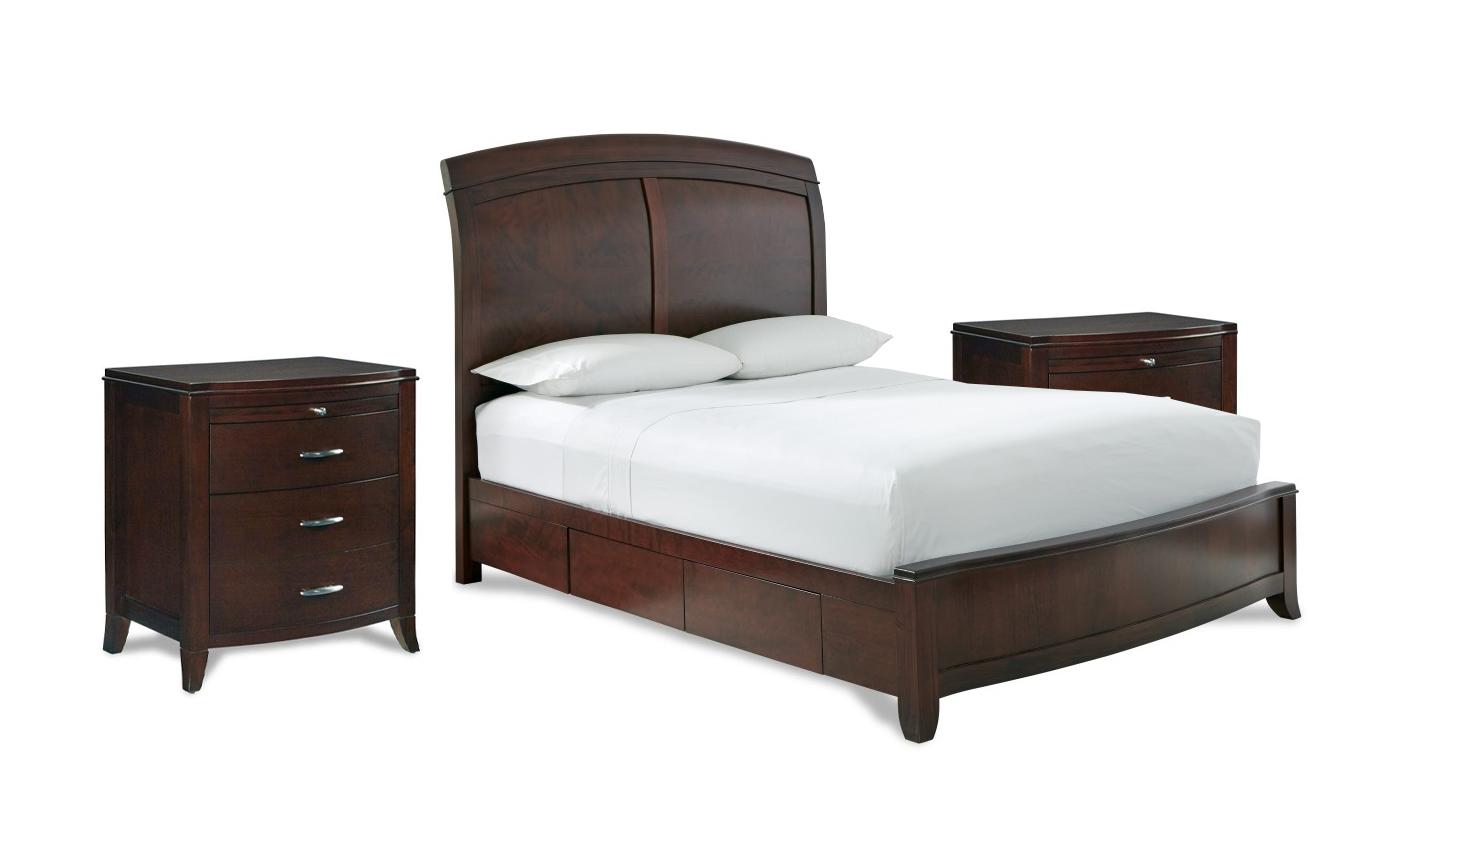 

    
Mahogany Finish Storage Queen Bedroom Set 4Pcs BRIGHTON by Modus Furniture
